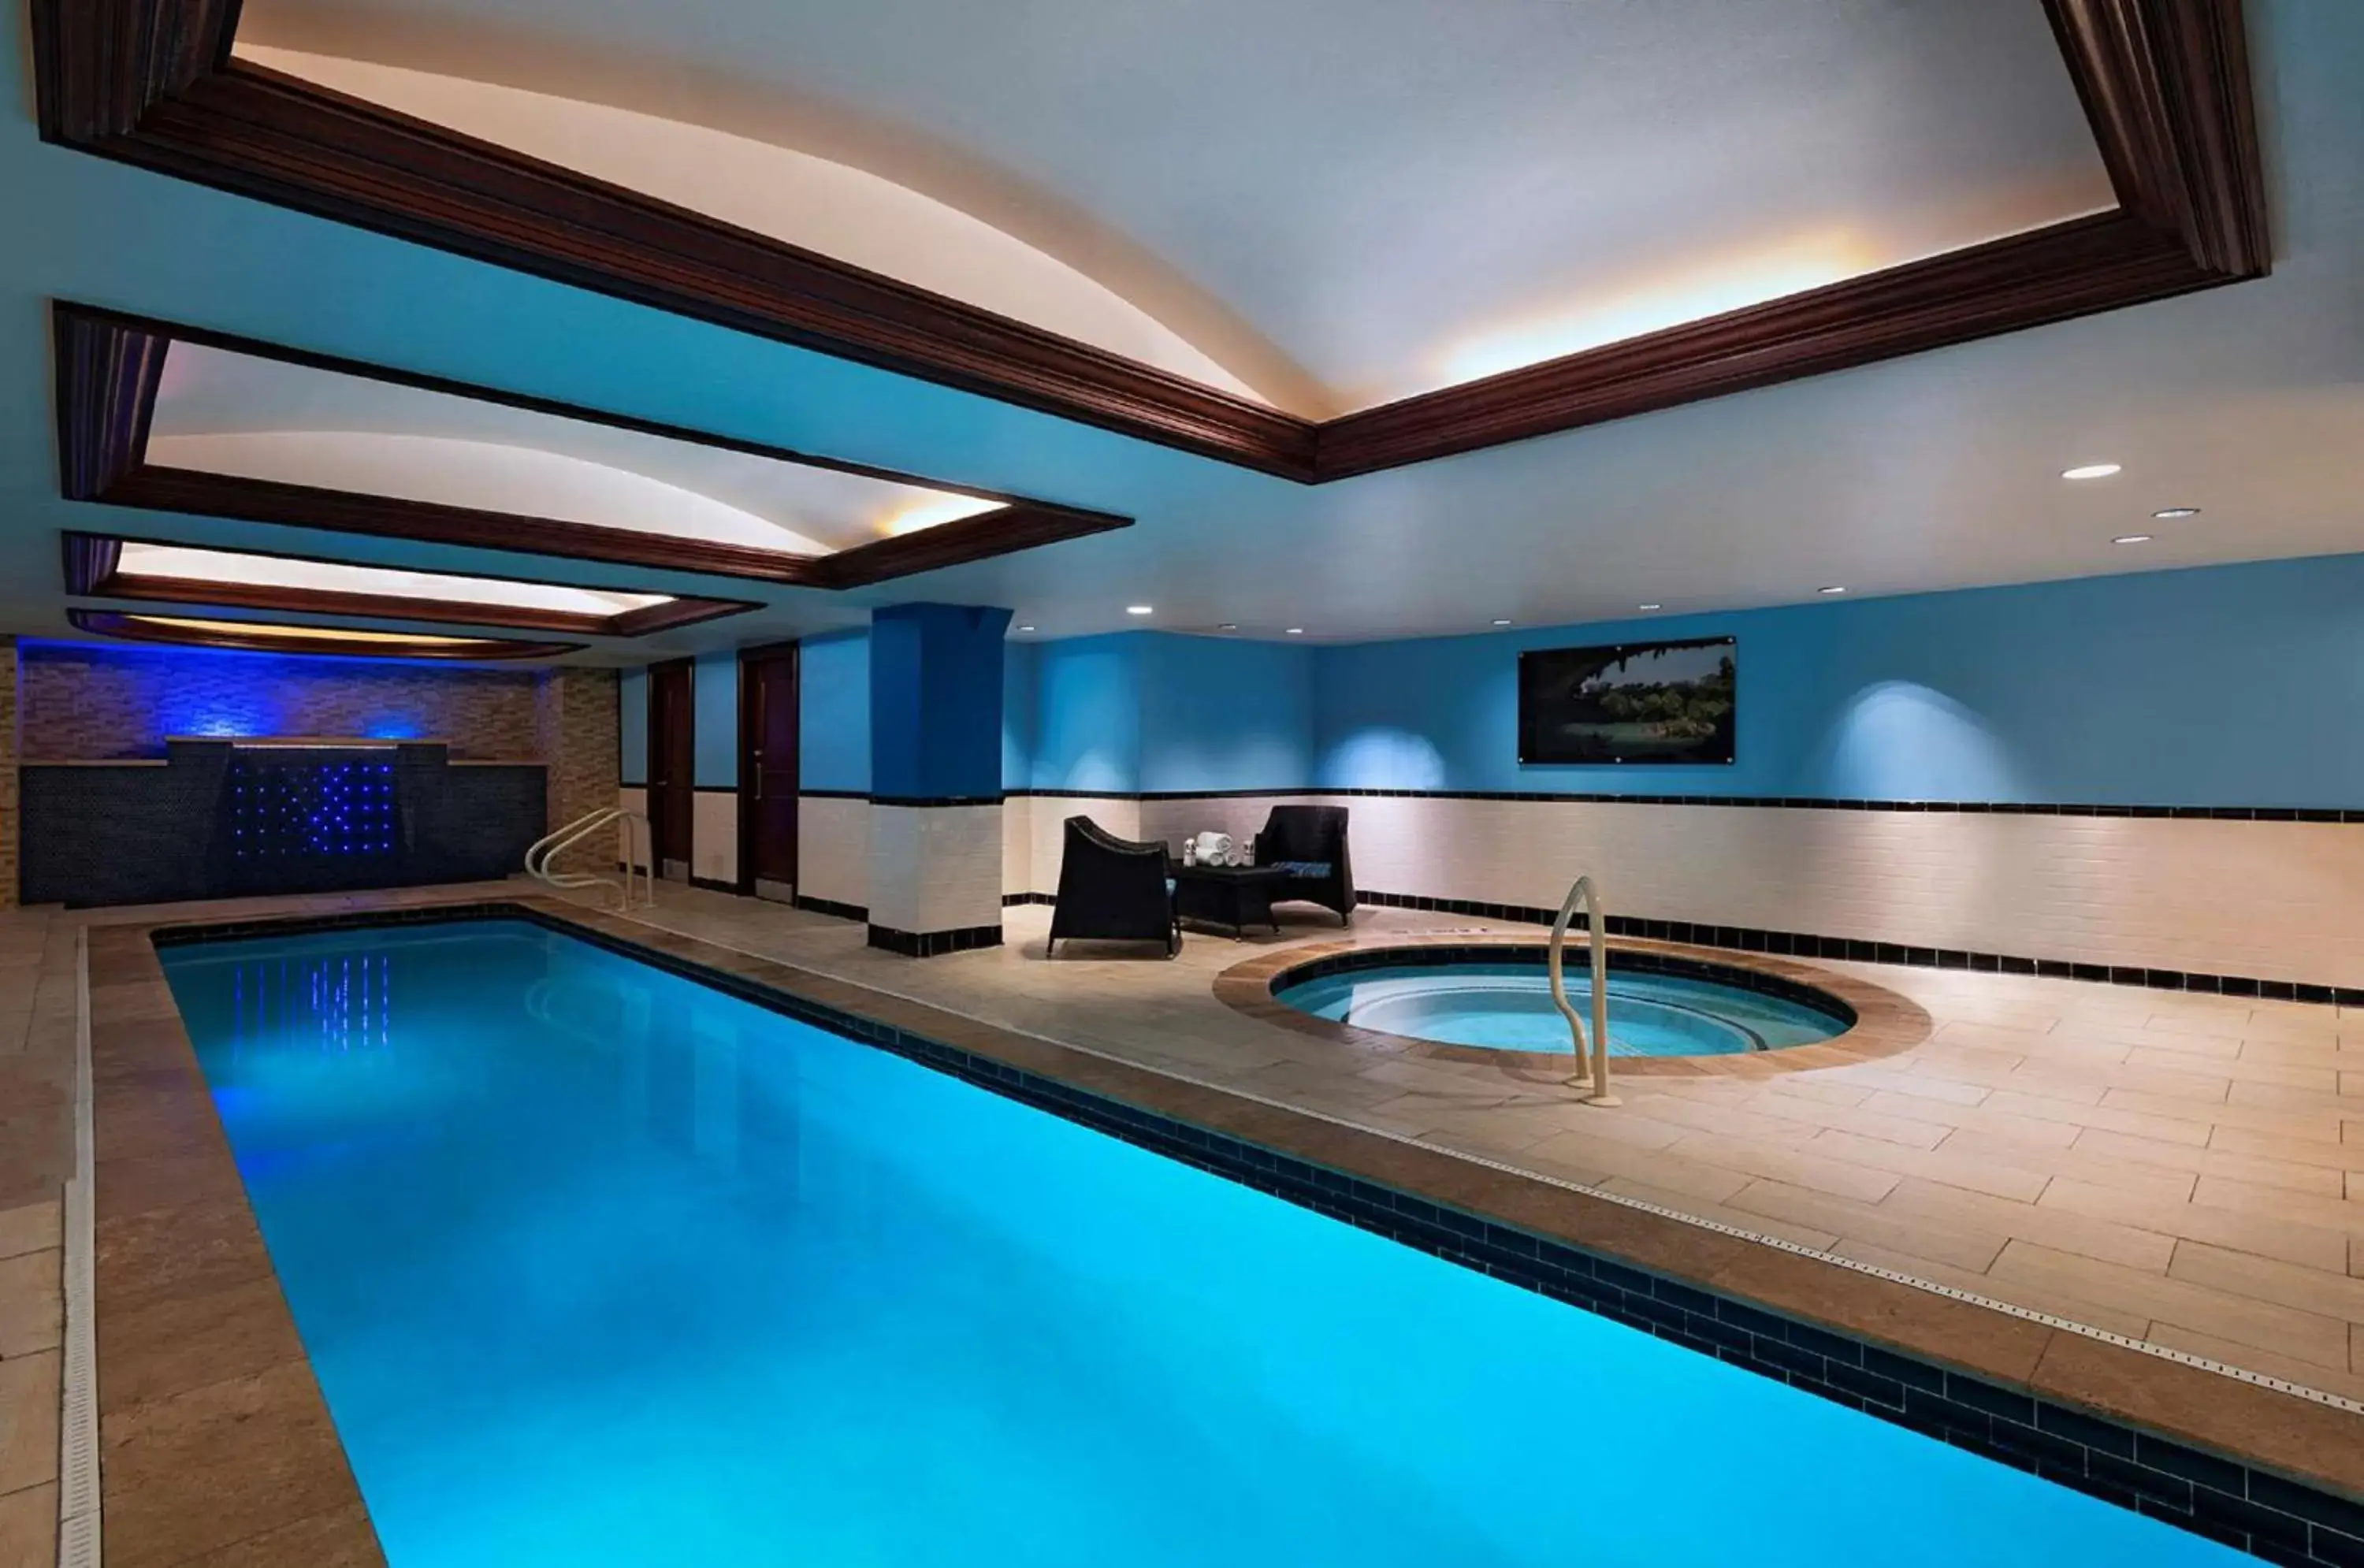 Swimming Pool in The Stephen F Austin Royal Sonesta Hotel